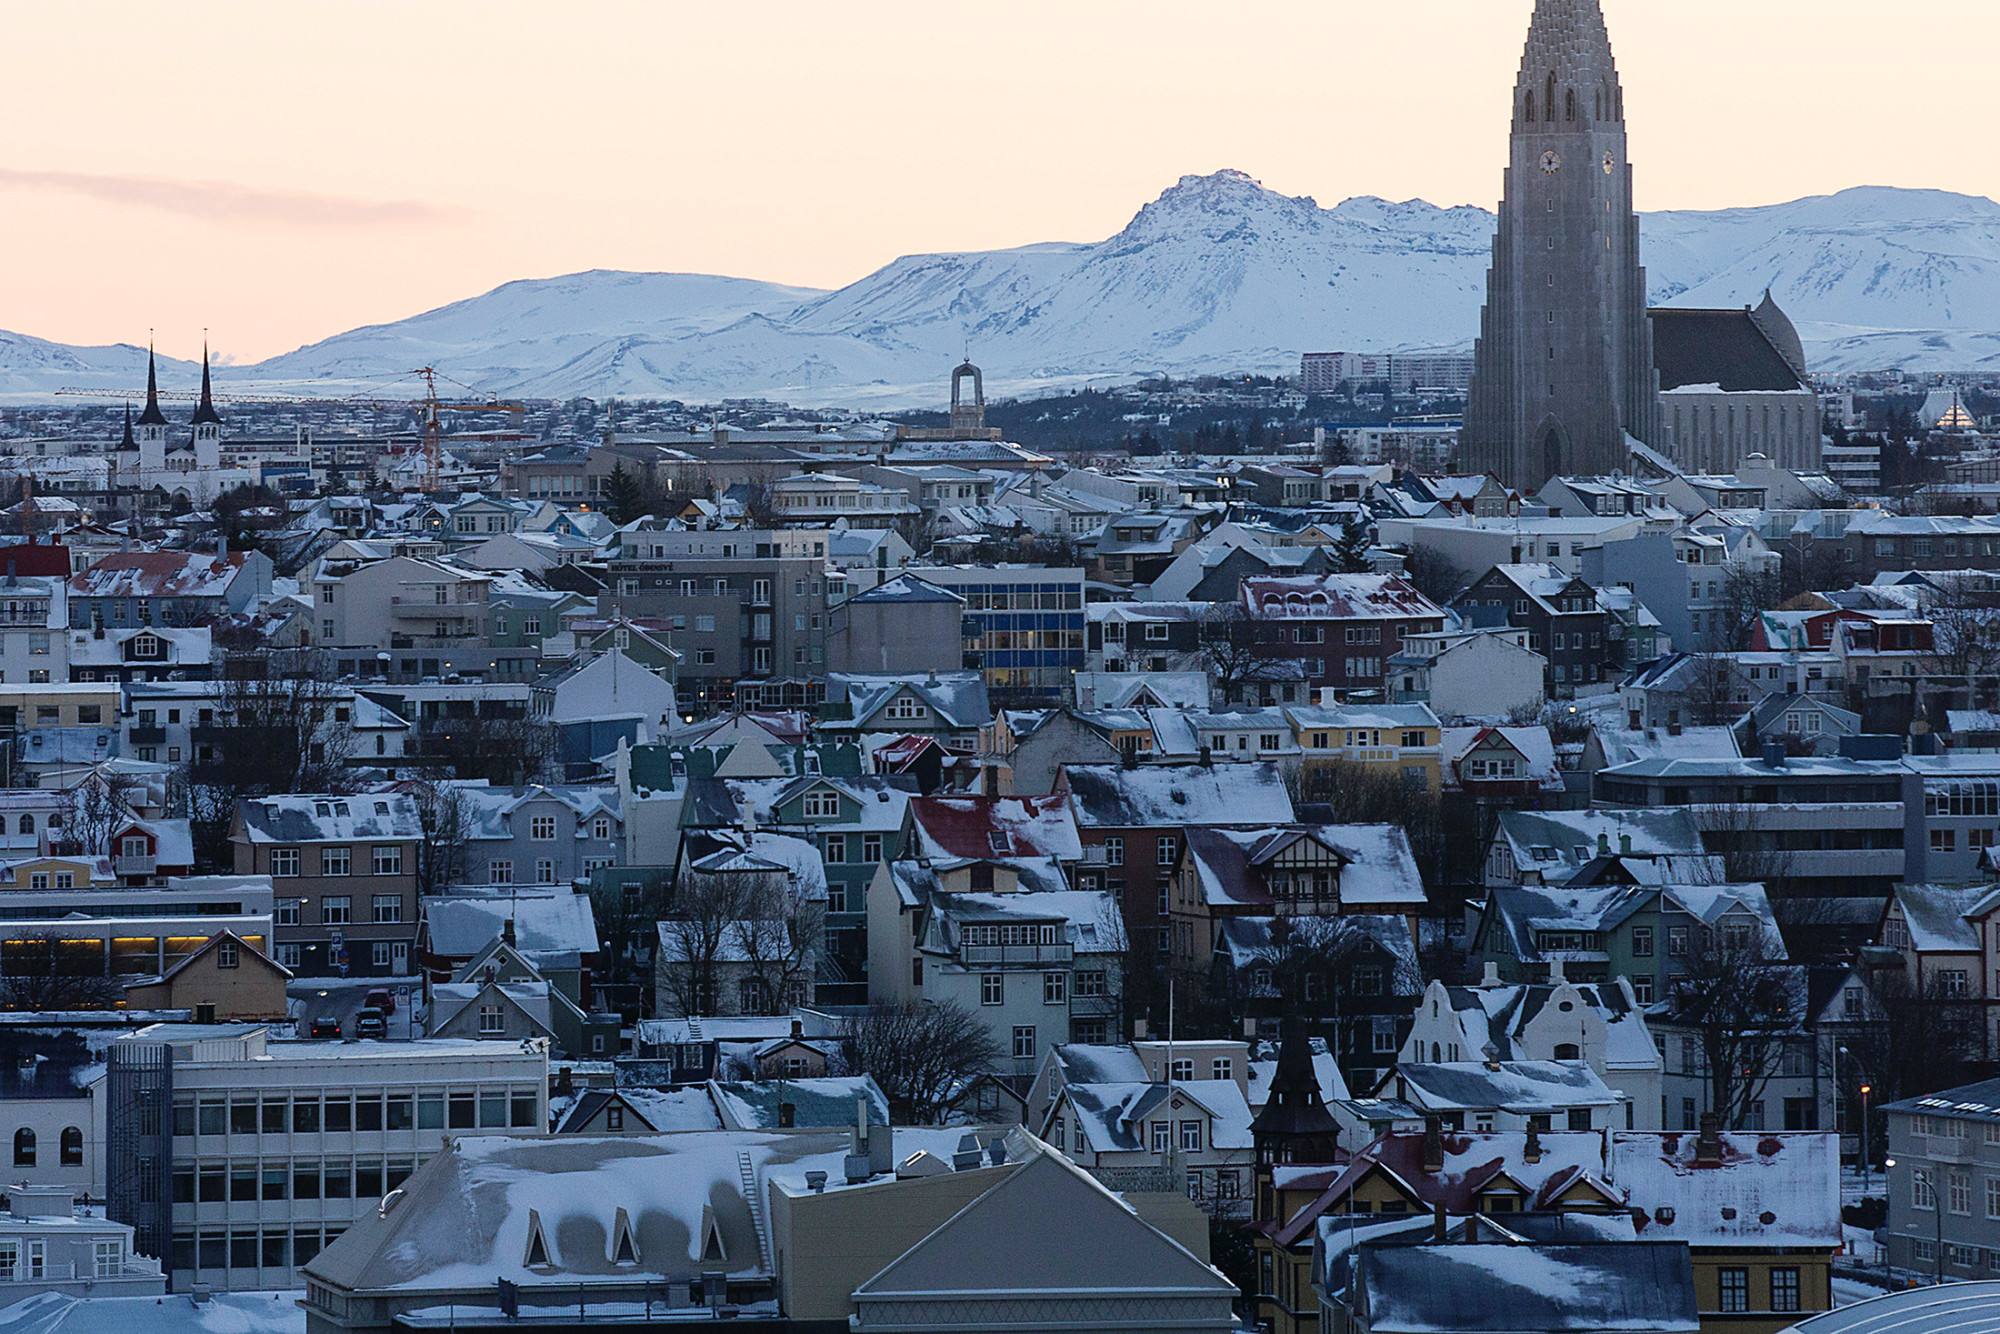 Reykjavik, Iceland, on Jan. 14, 2016.
